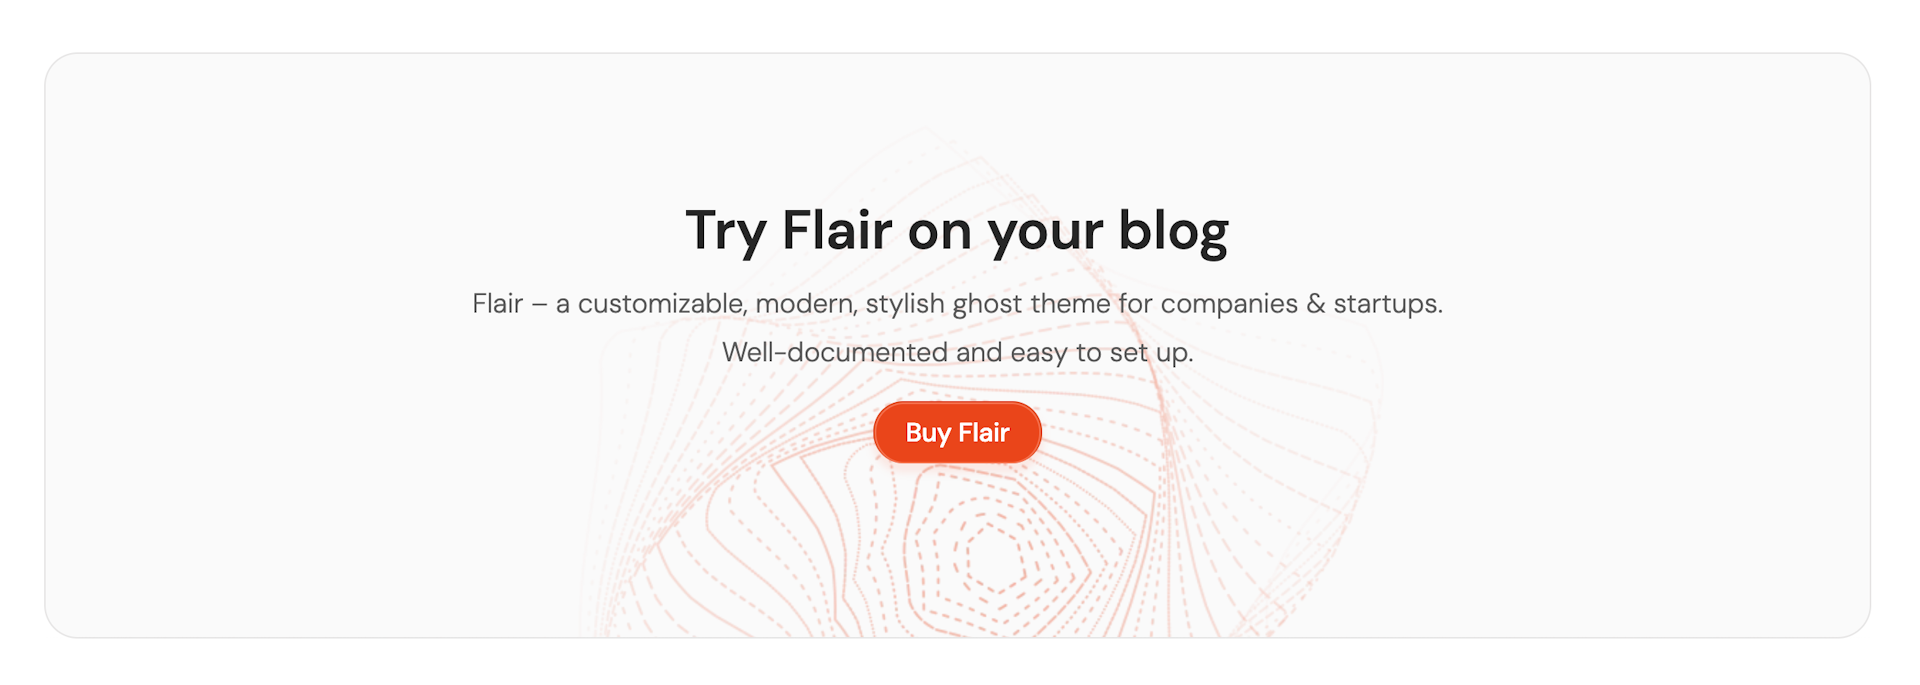 Flair — CTA section